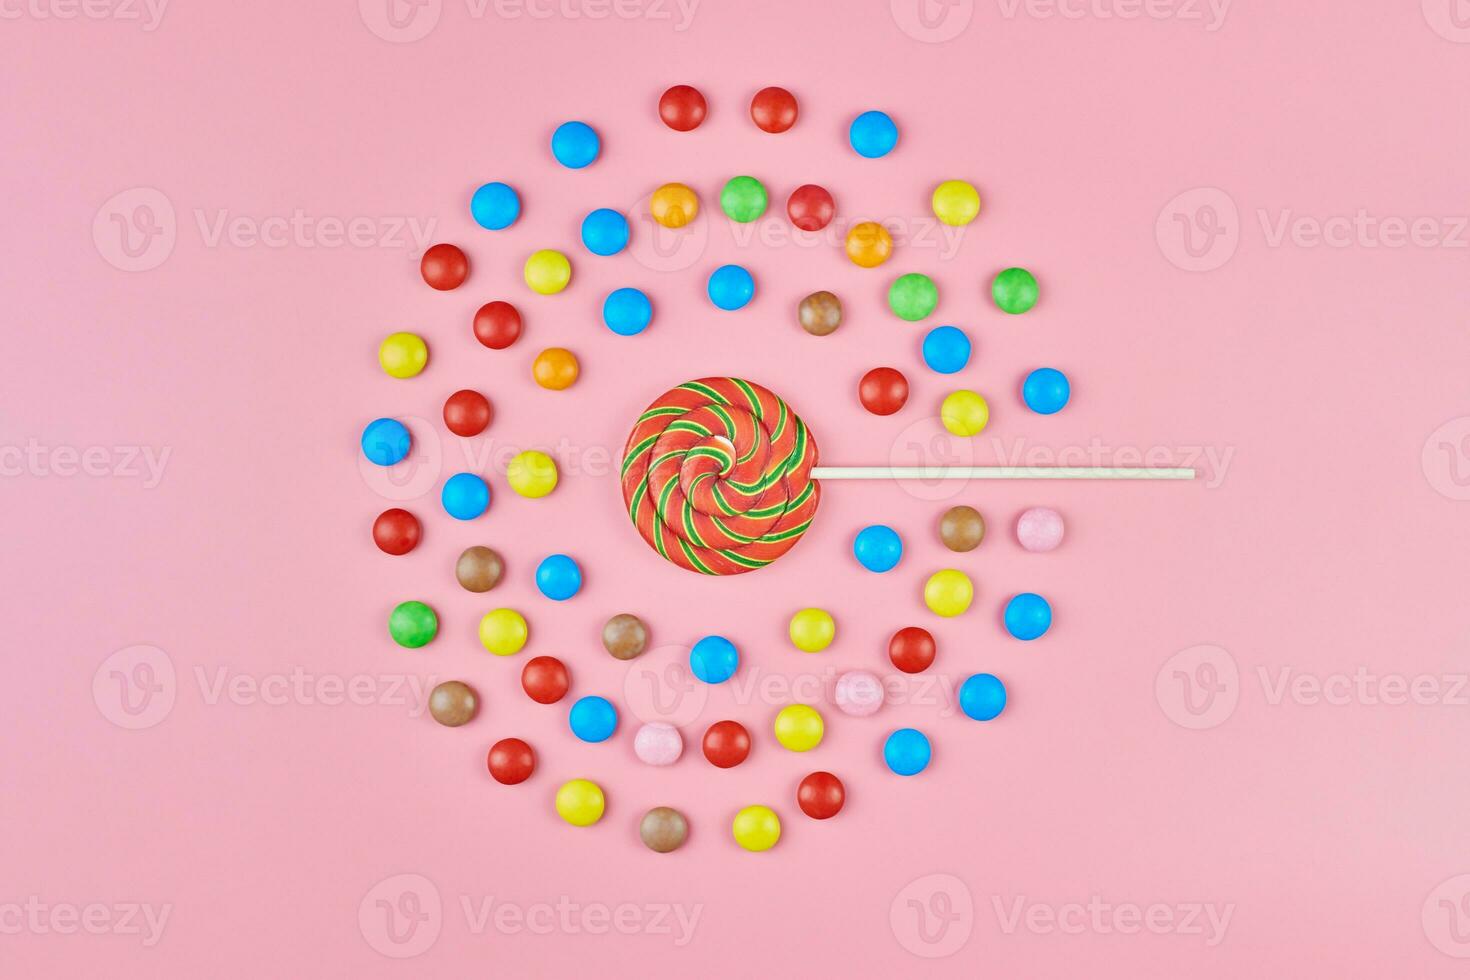 piruleta dulce y caramelo sobre fondo rosa foto